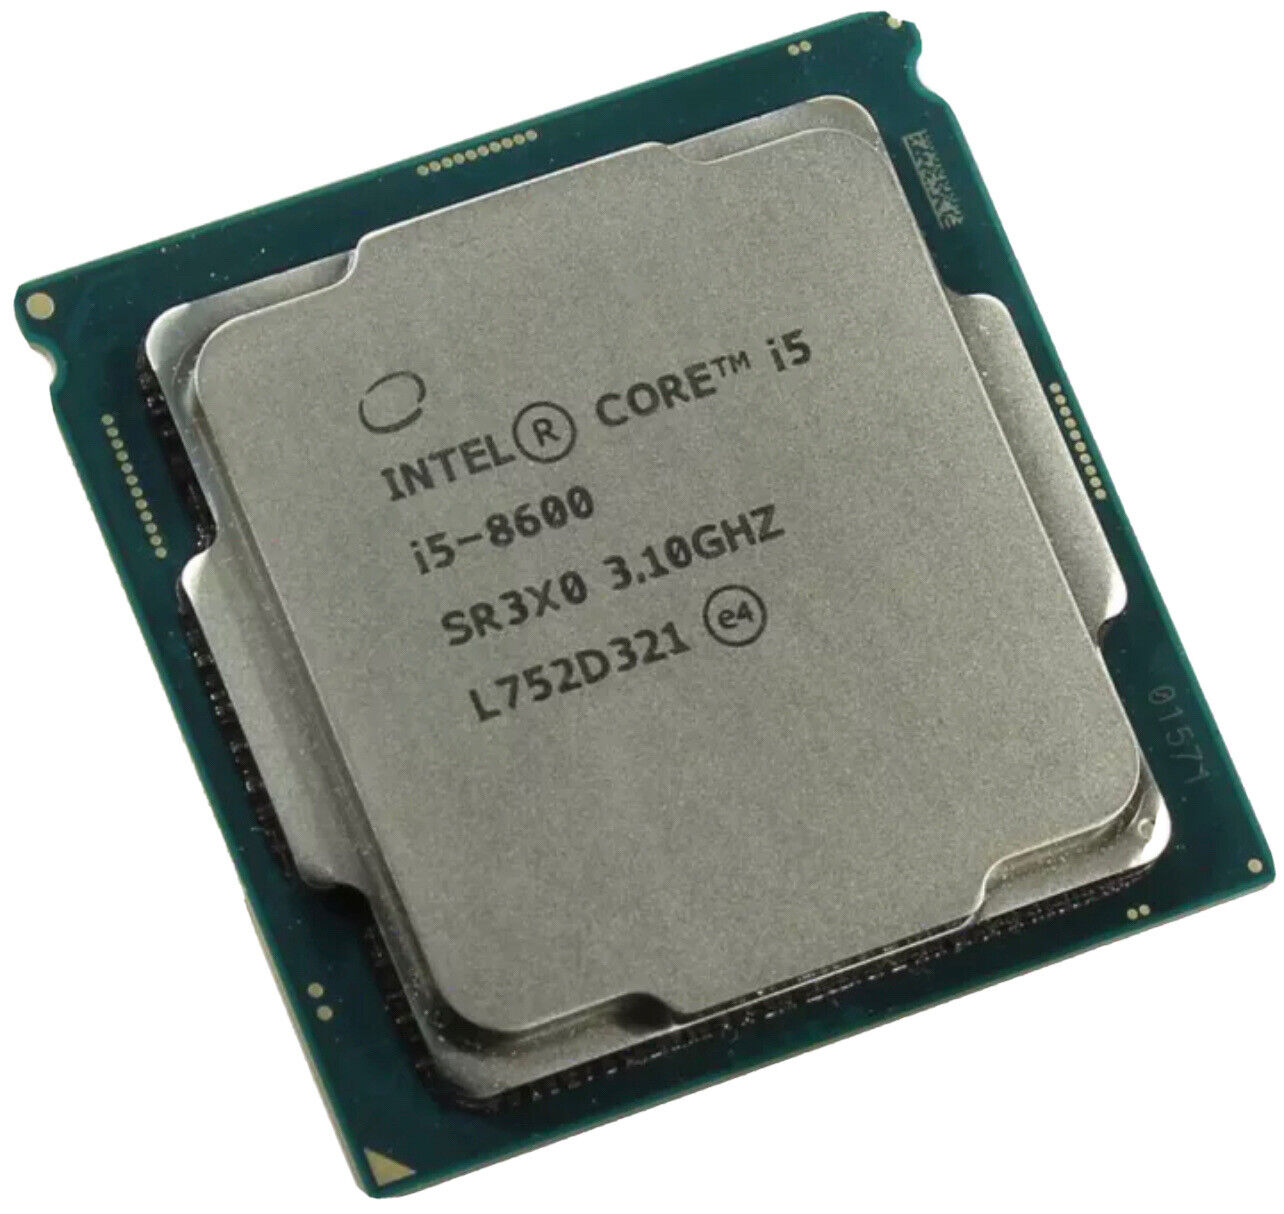 8th GEN Intel Core i5-8600 3.10GHz SR3X0 LGA1151 Six-Core CPU Processor